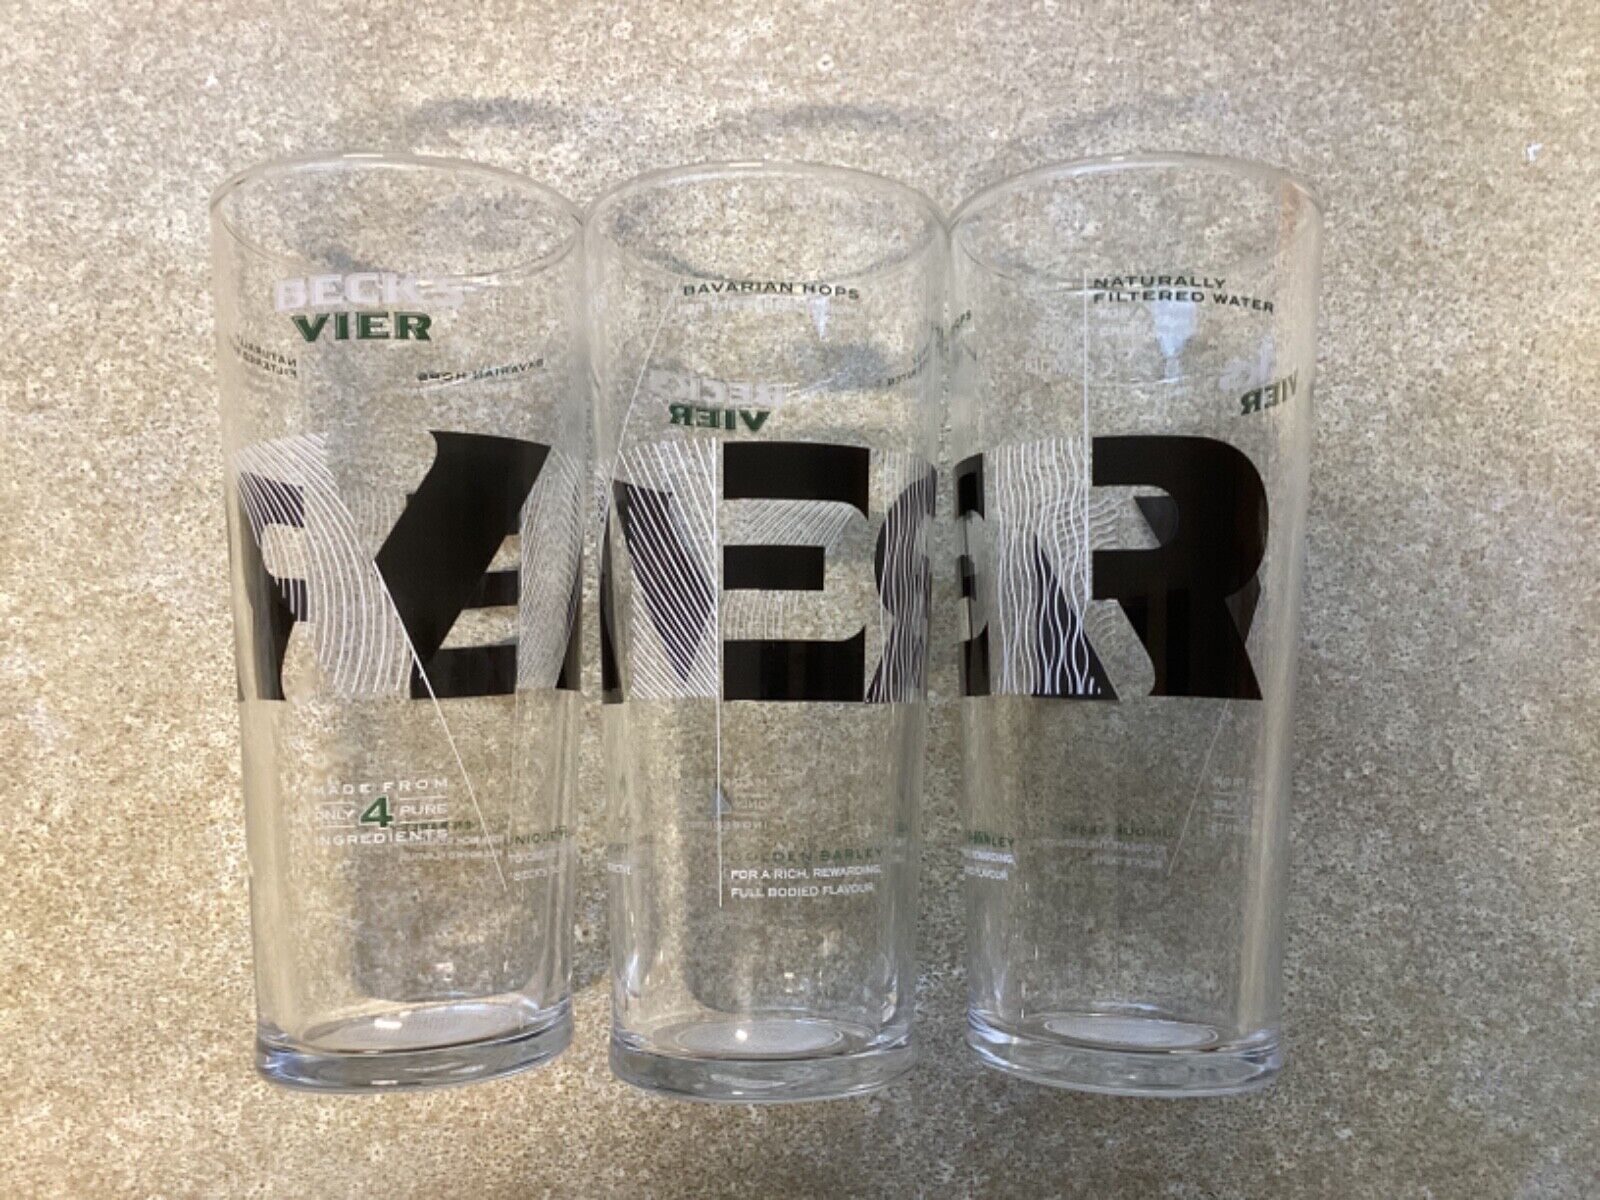 Set of 3 Becks Lager / Beer Glasses - New CE Marked